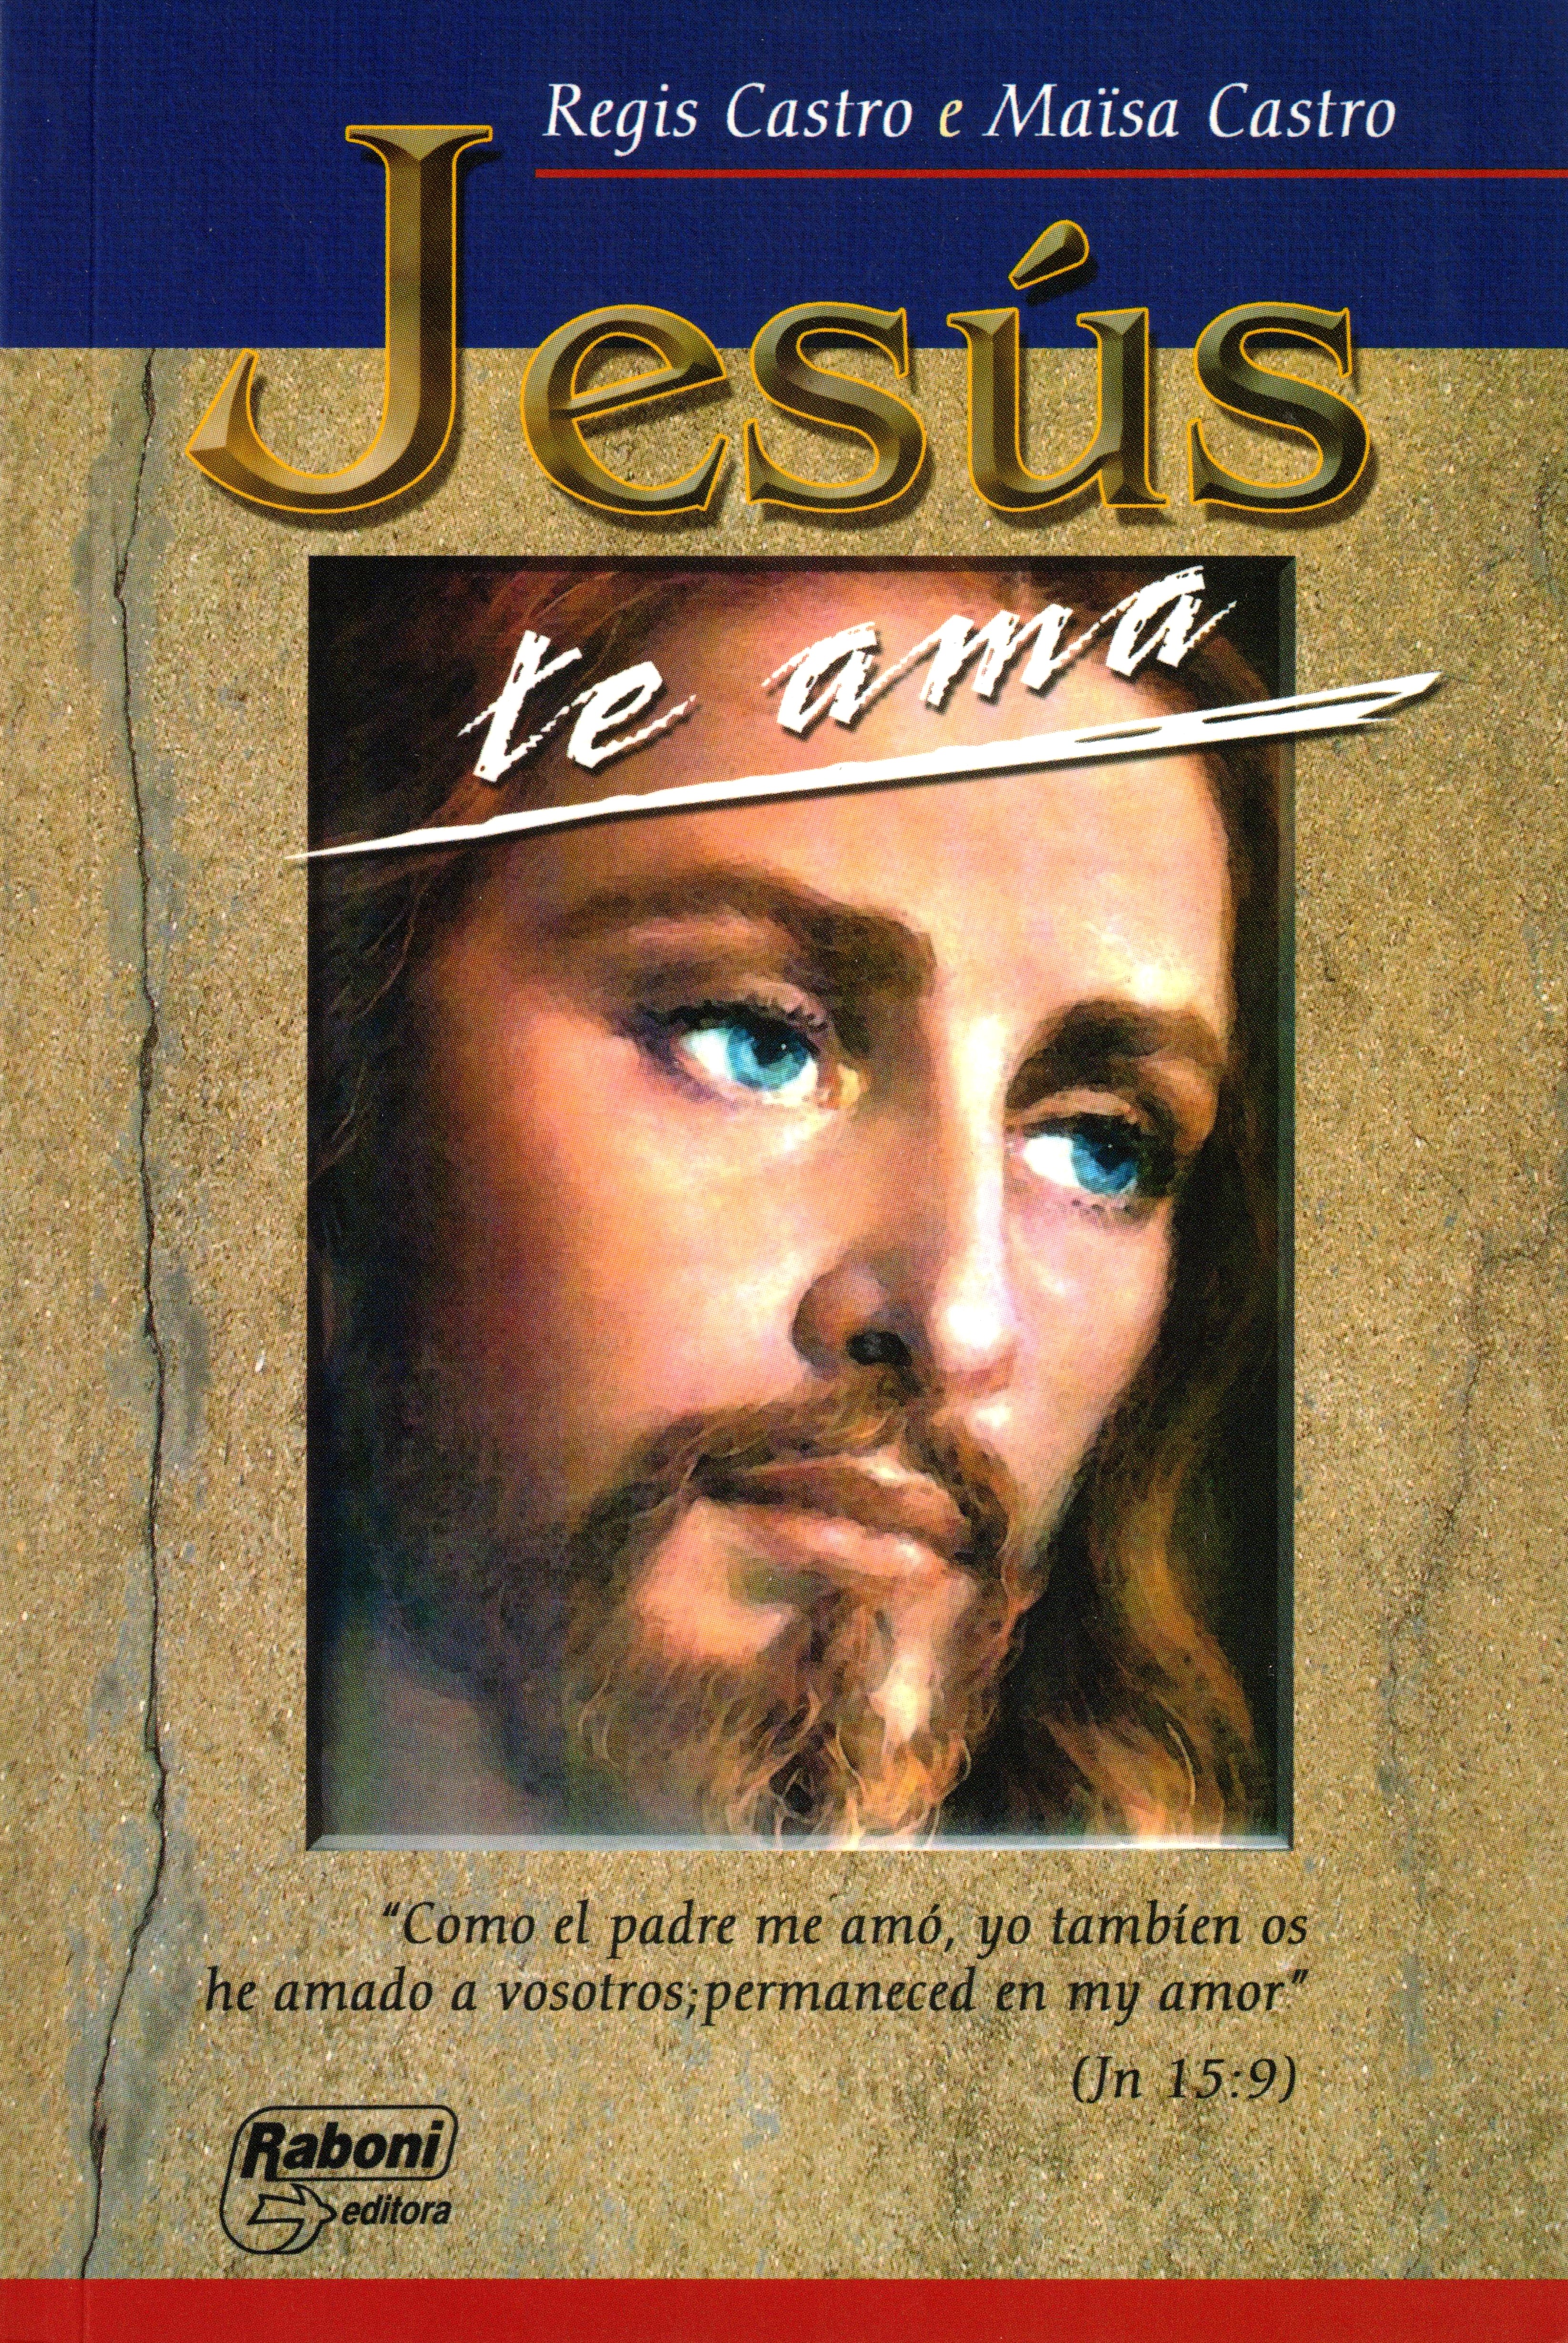 Jesús te ama